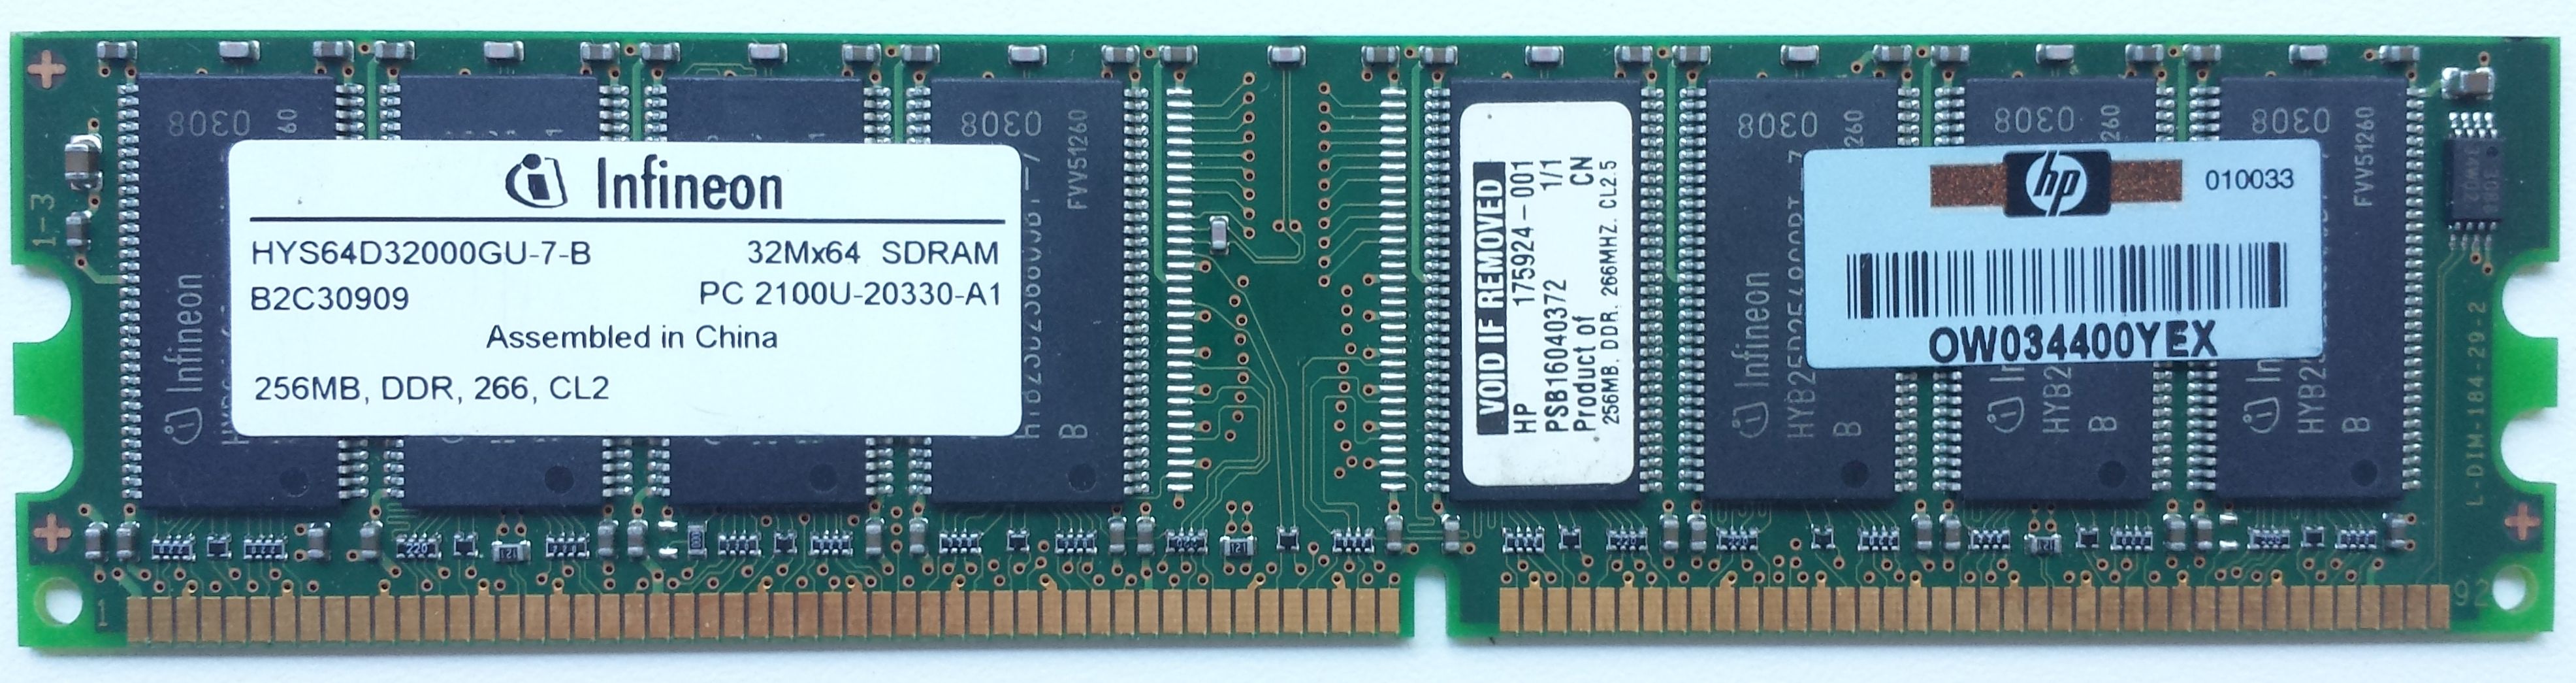 DDR 256MB 266Mhz-PC2100 / Infineon HYS64D32000GU-7-B